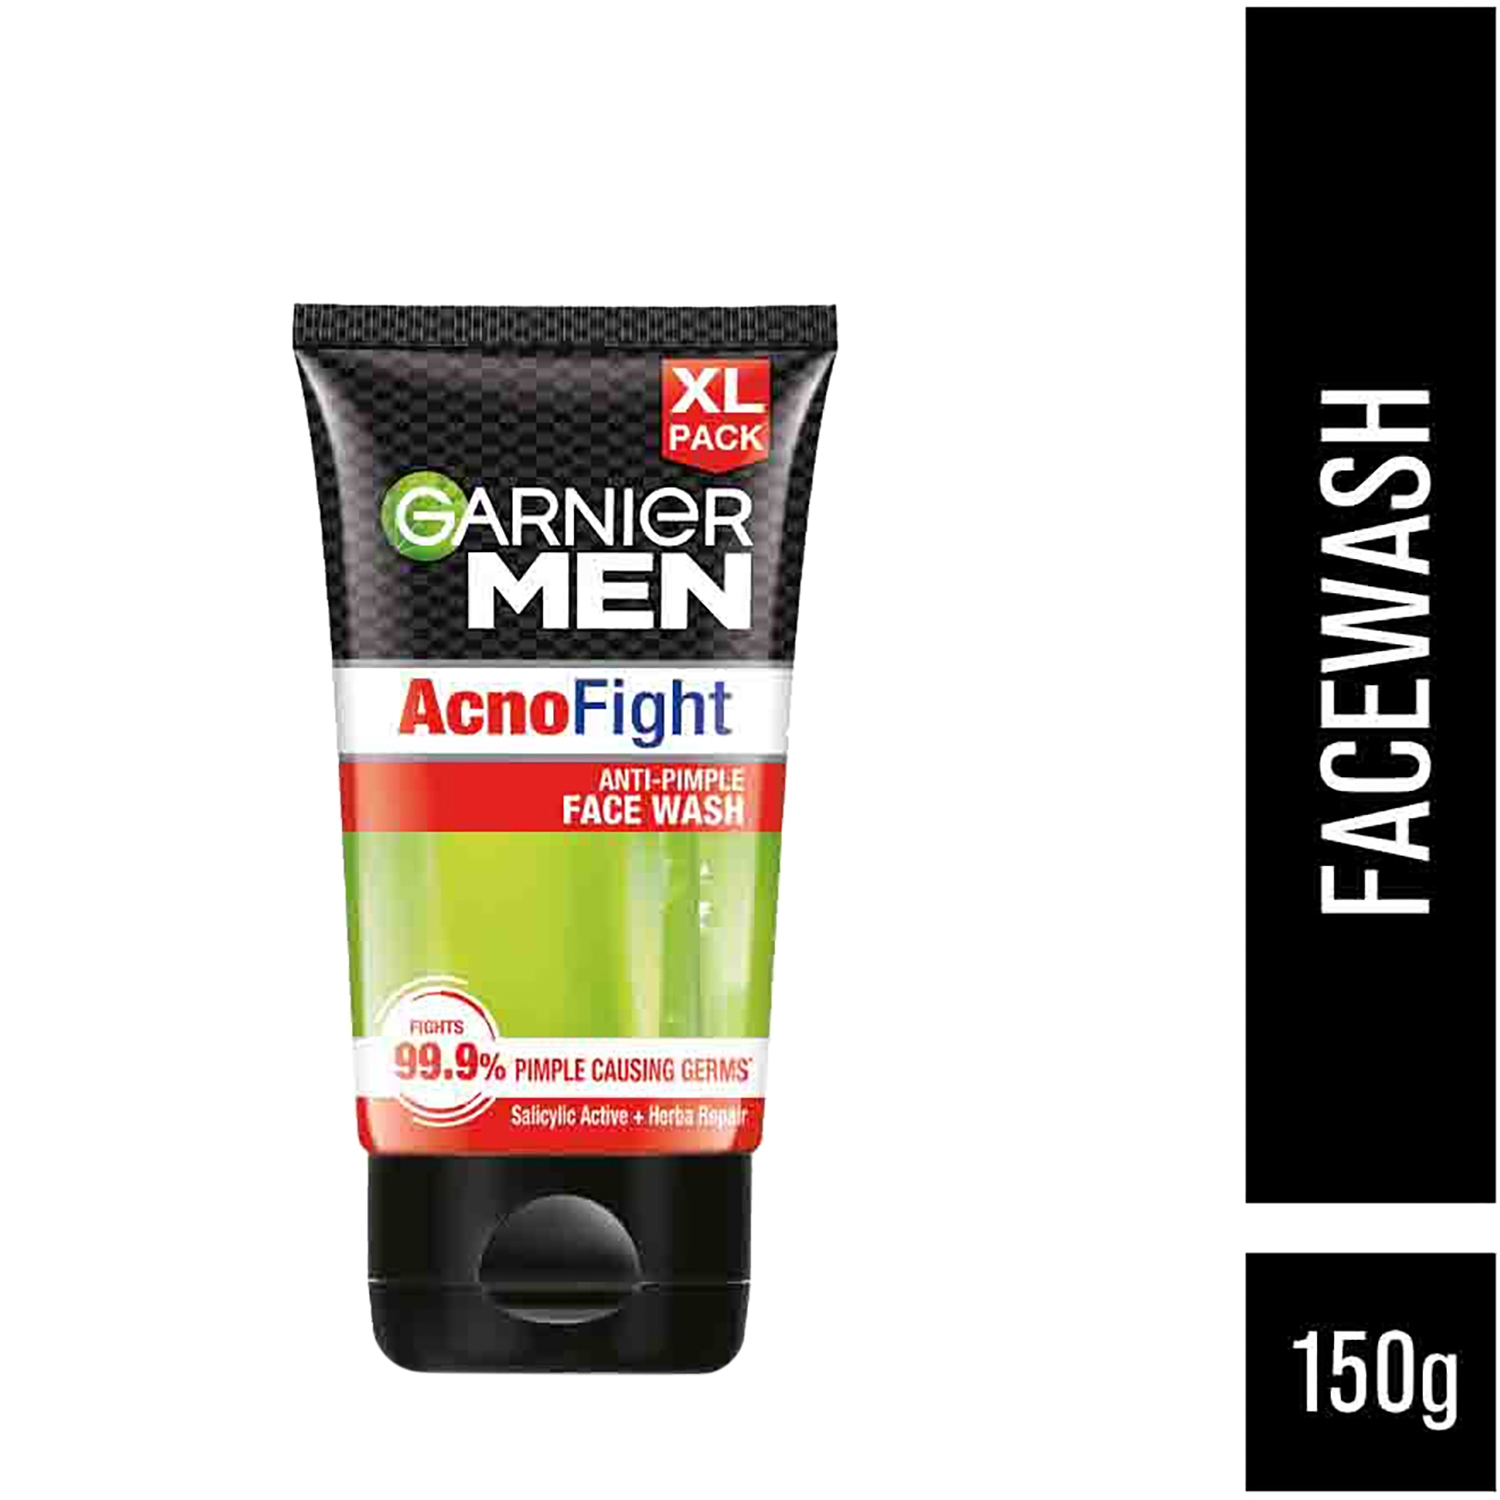 Garnier Men Acno Fight Anti-Pimple Face Wash (150g)